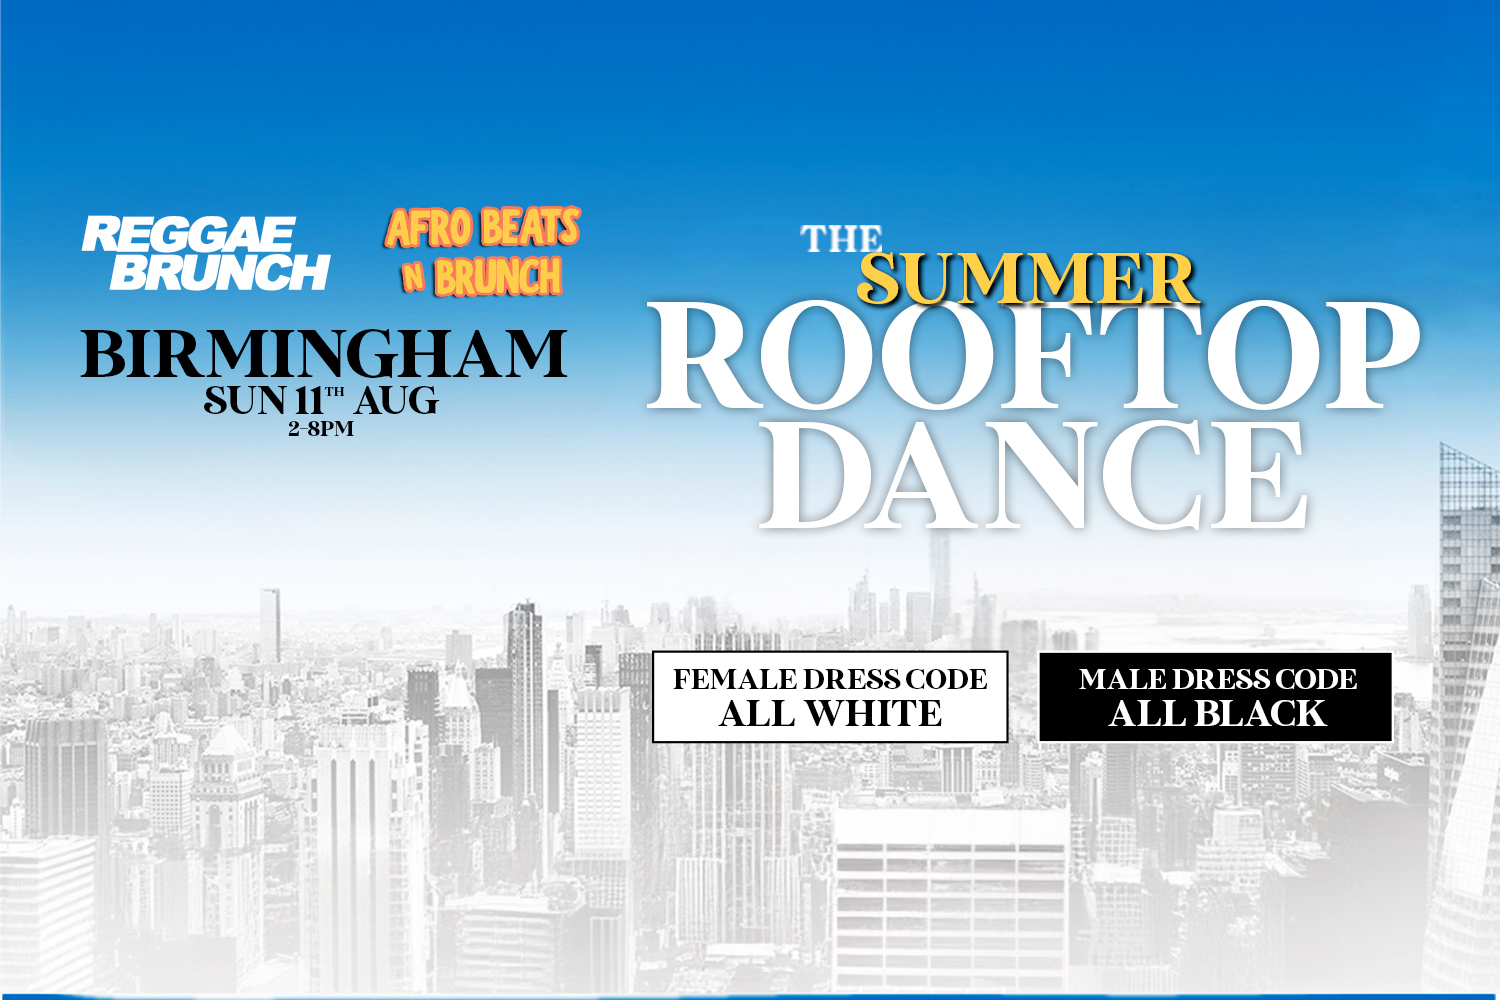 Sun, 11th Aug | Rooftop Dance